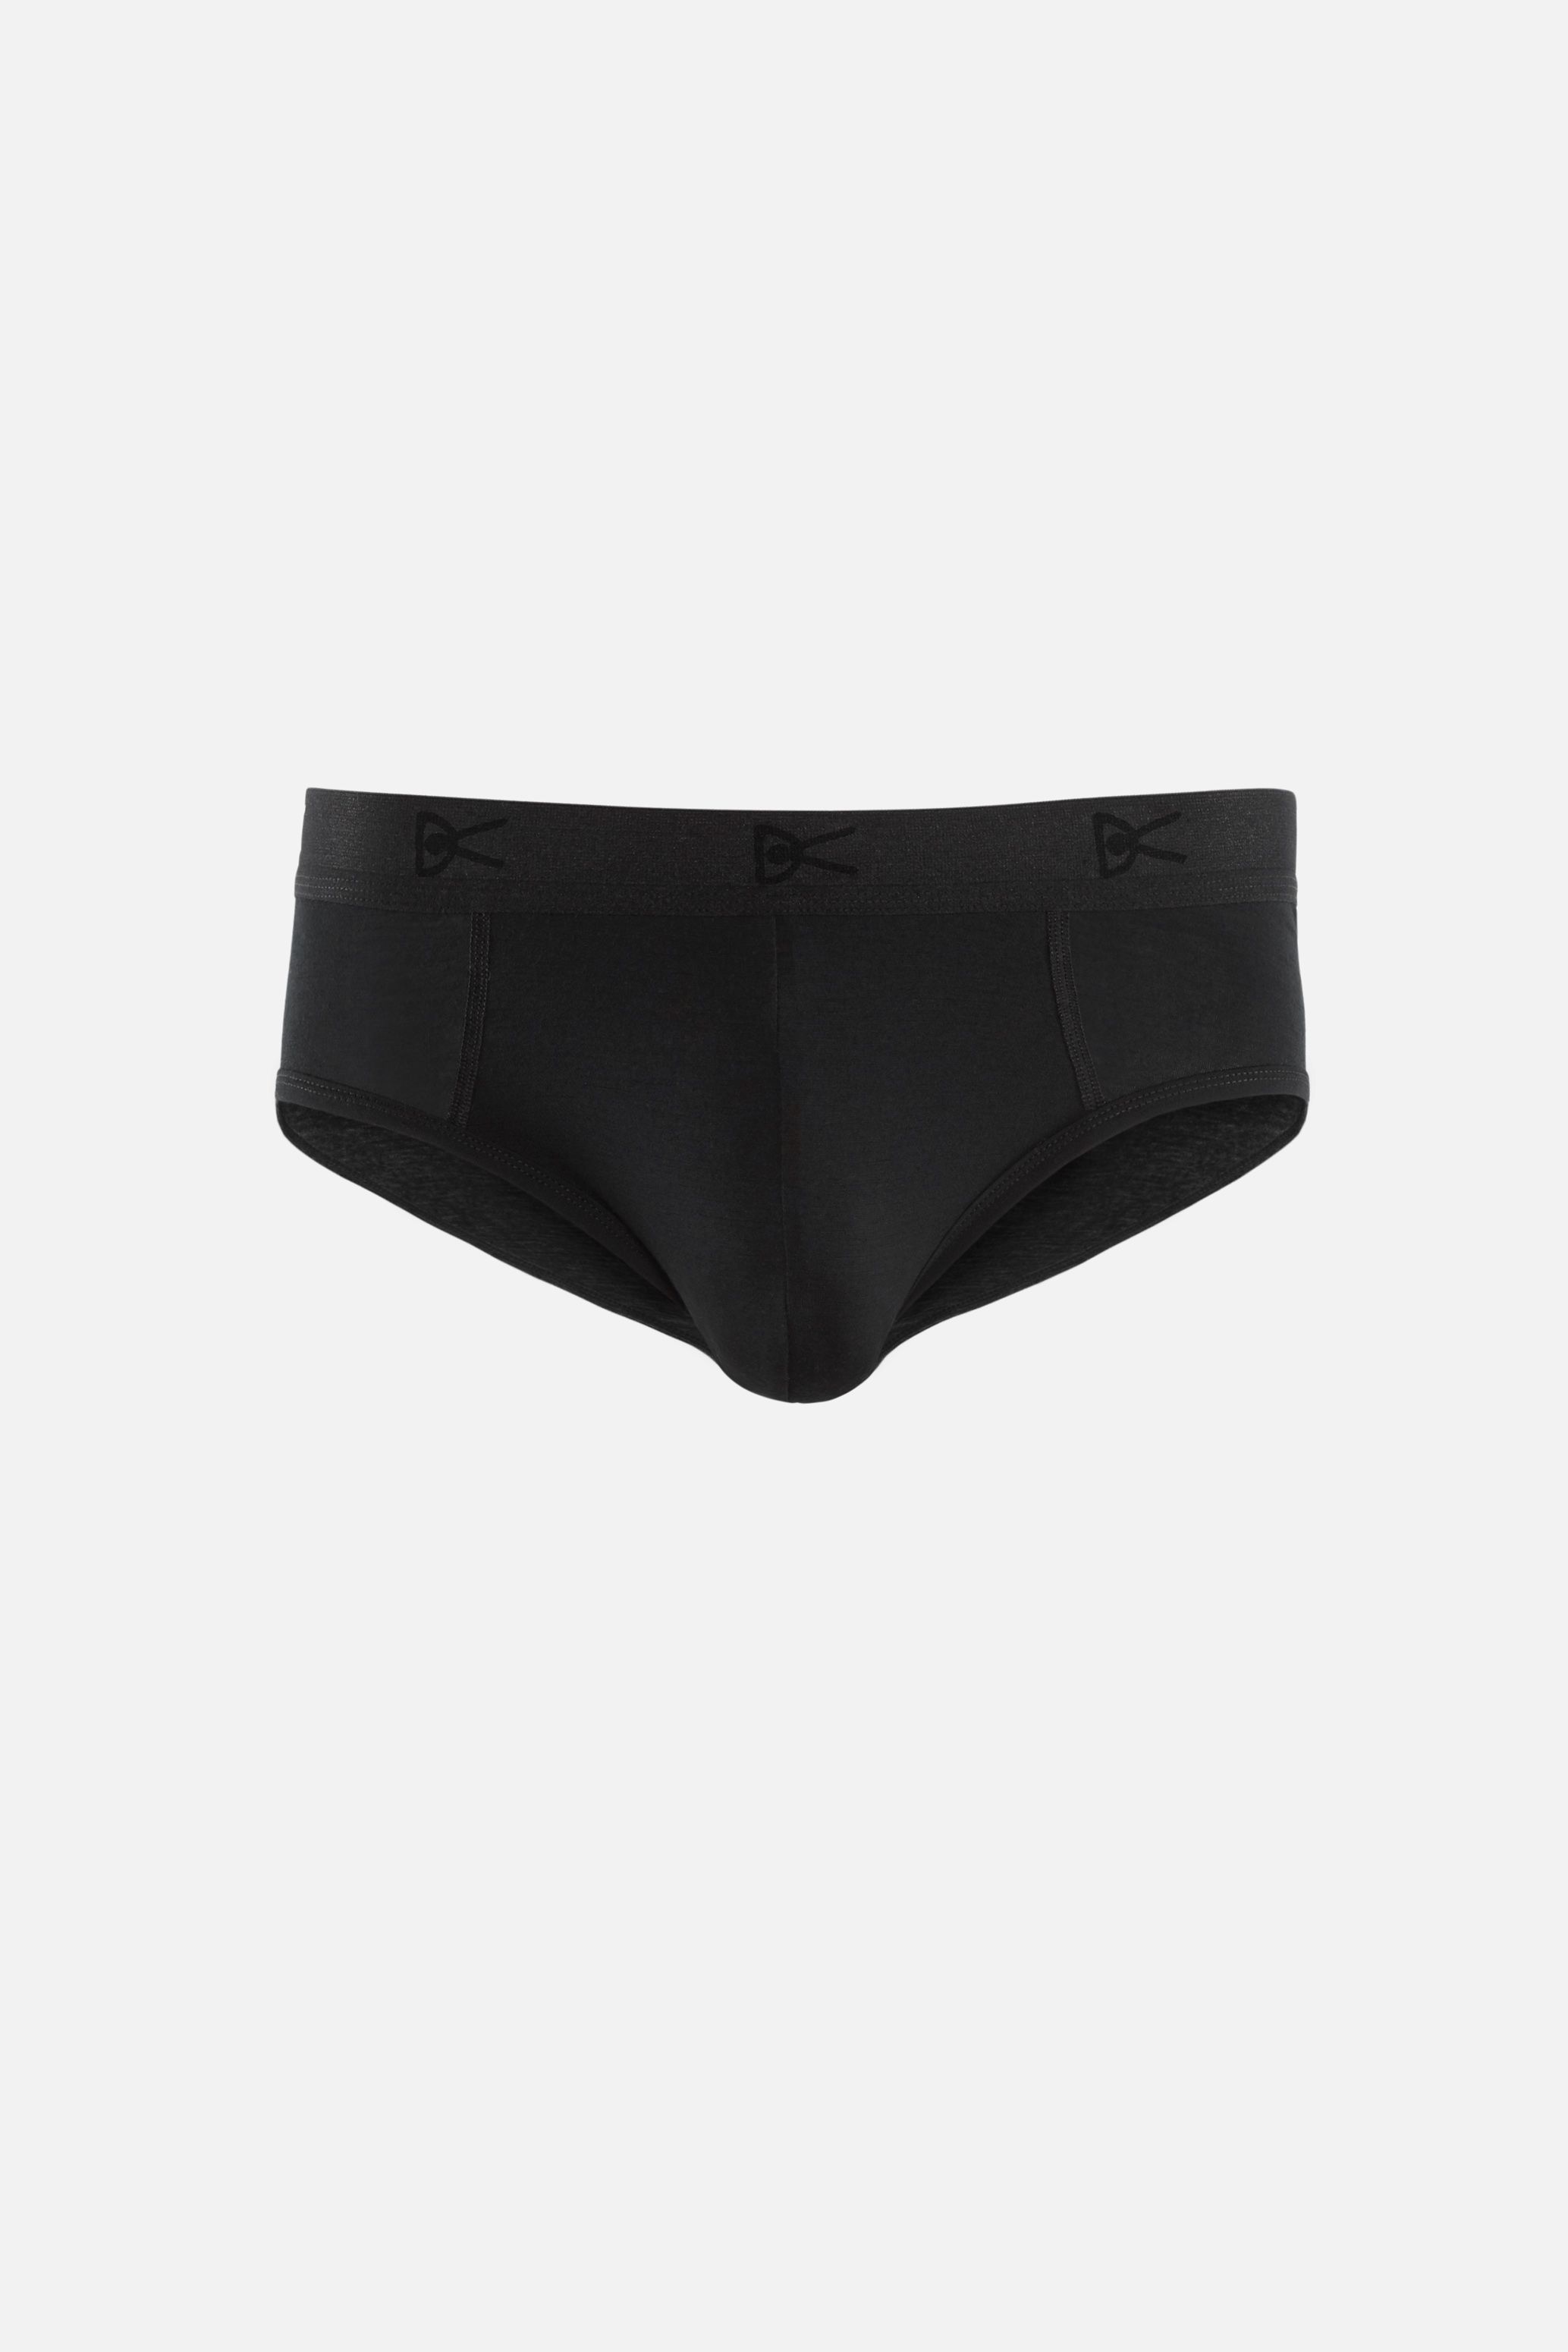 Sydney Merino Underwear, Black